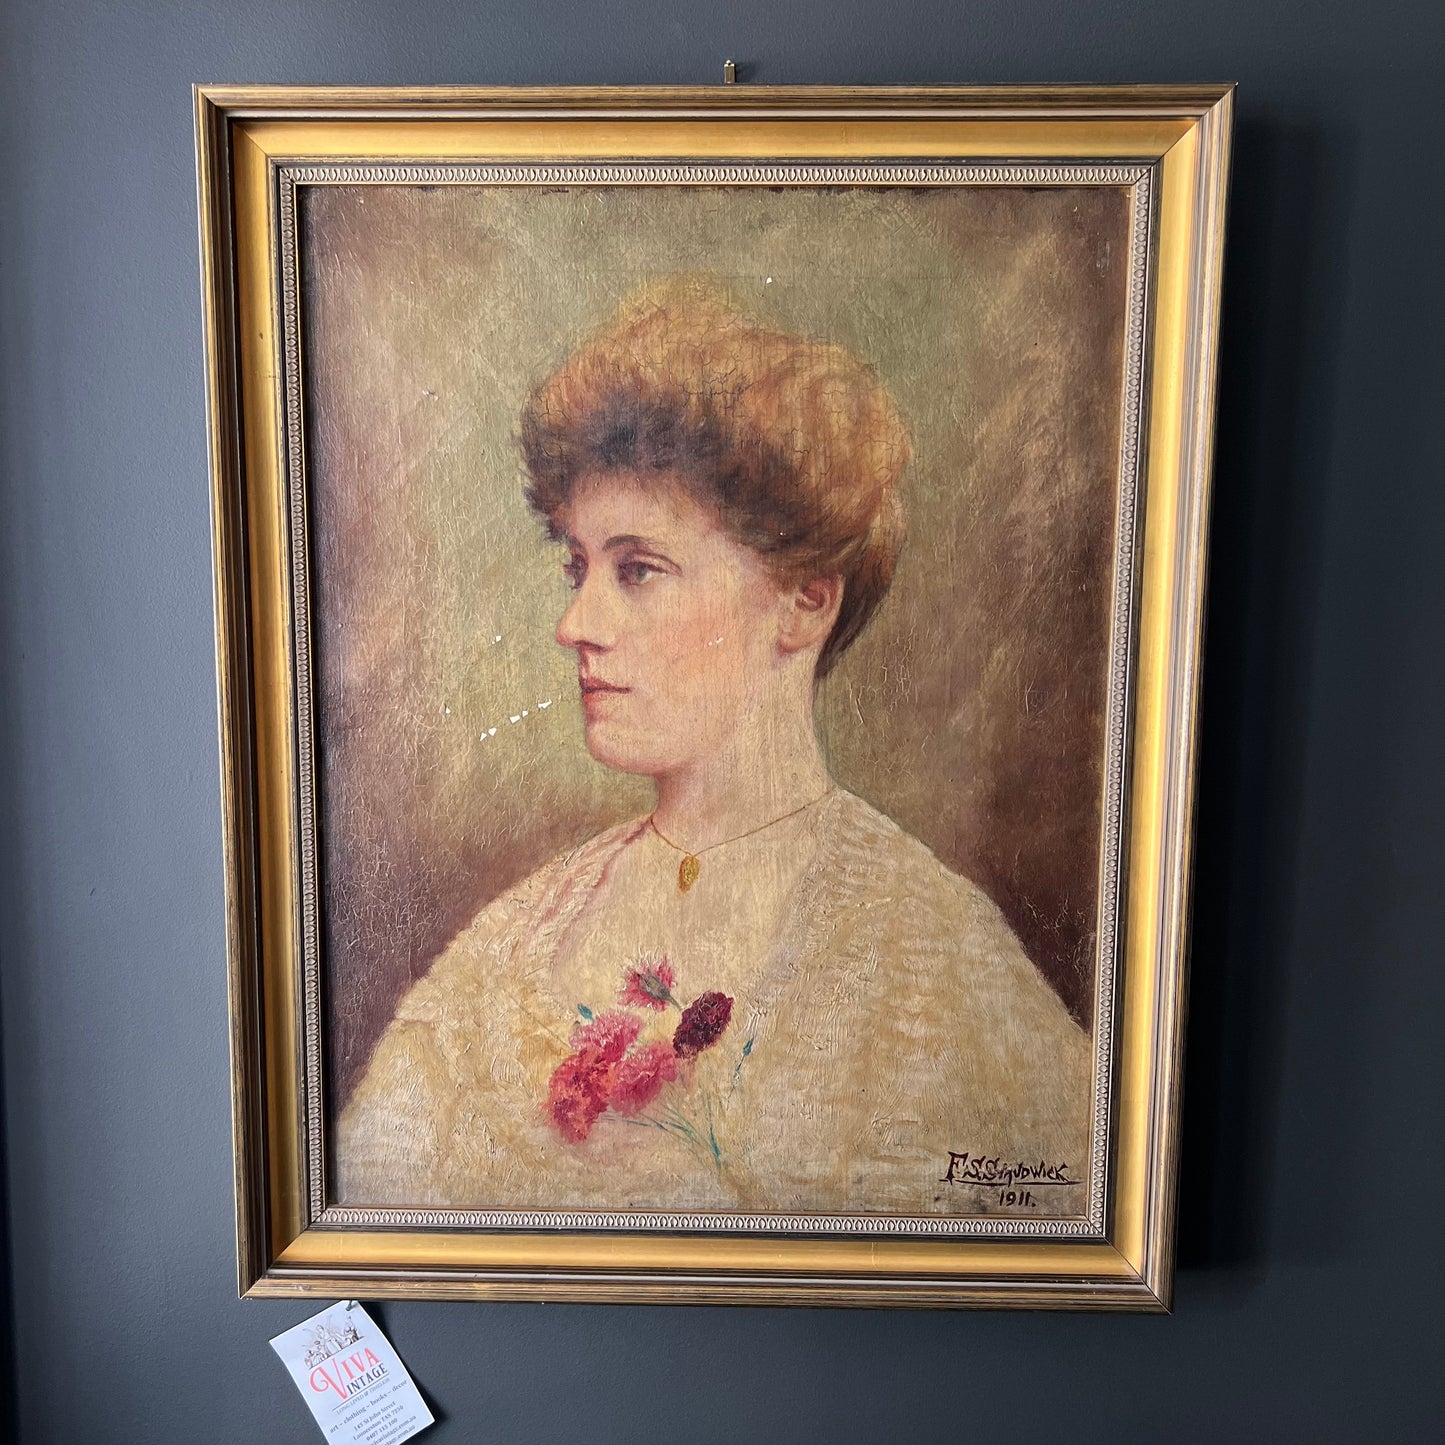 Antique Portrait Oil Painting Lady with Cornflowers 1911